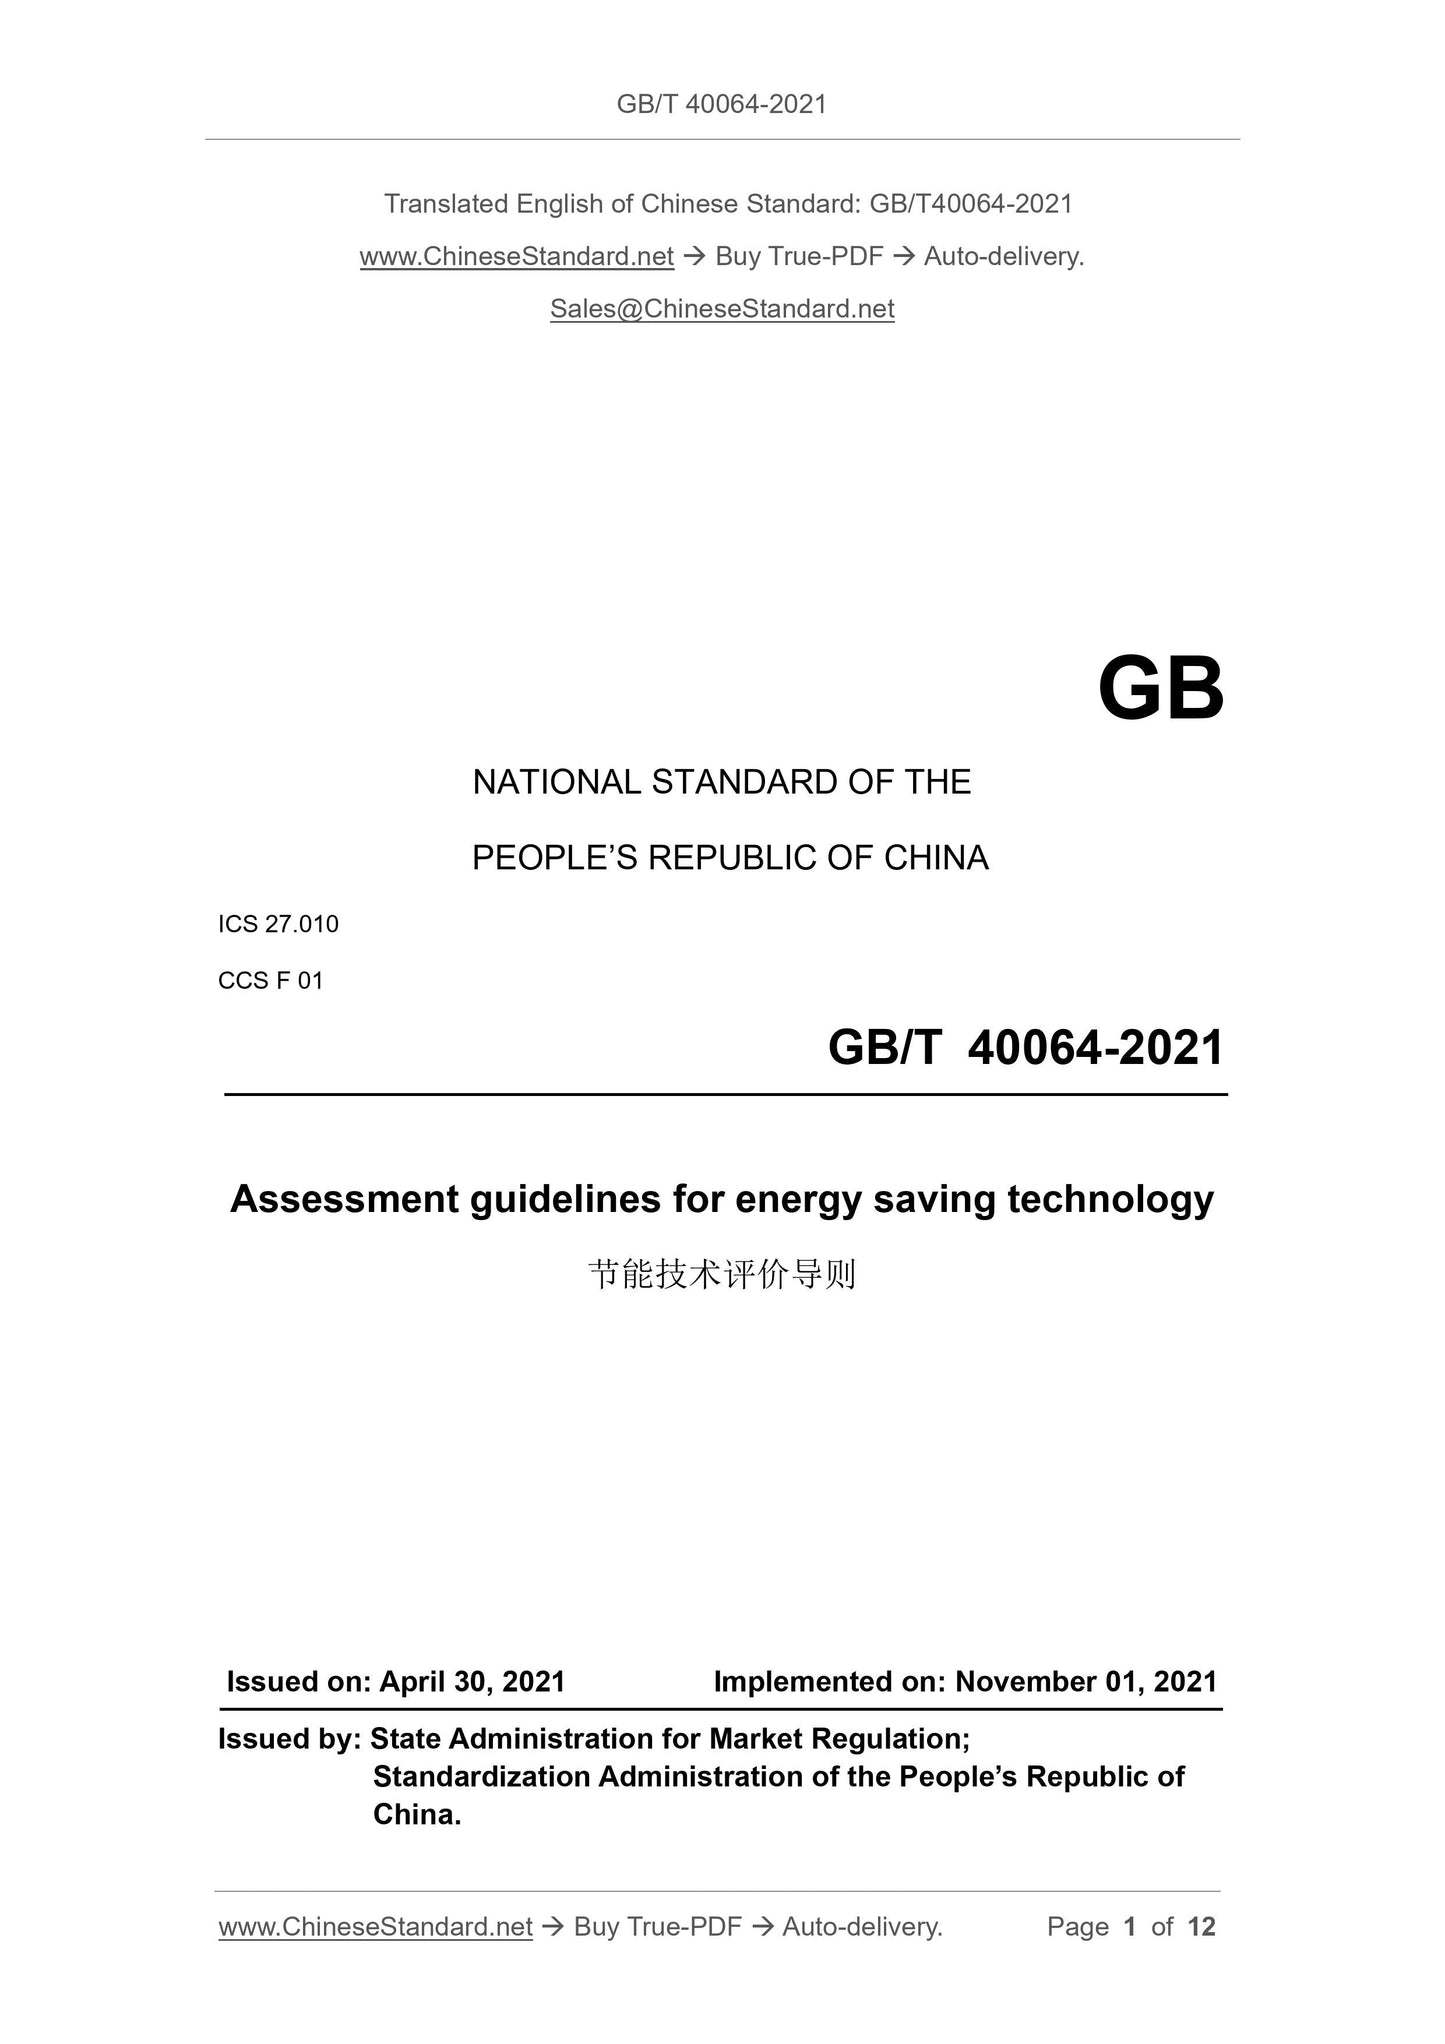 GBT40064-2021 Page 1